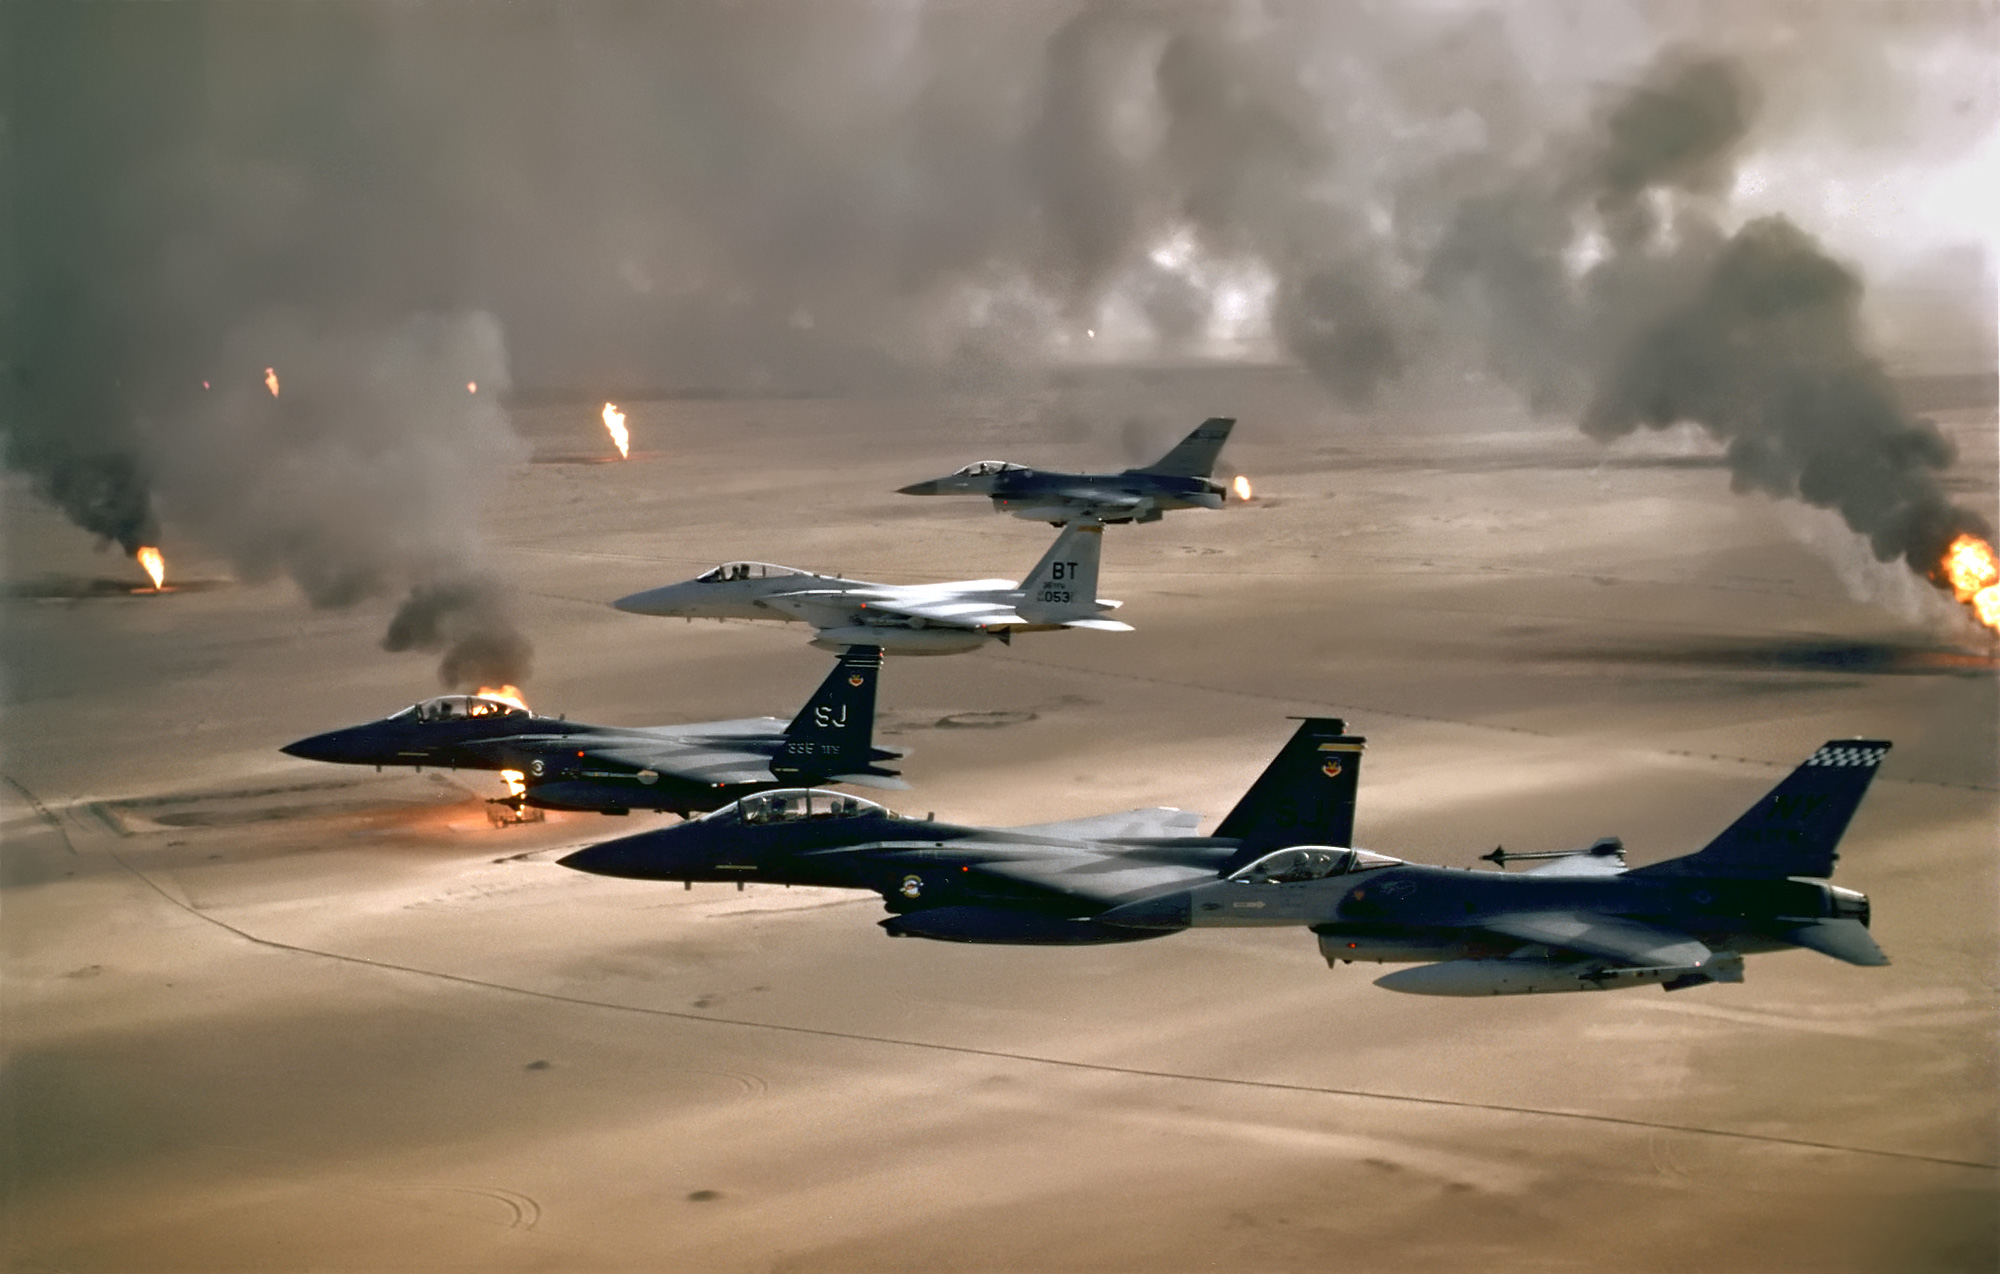 http://clockworkconservative.files.wordpress.com/2013/02/f-16-fighting-falcon-burning-iraqi-oil-wells.jpg